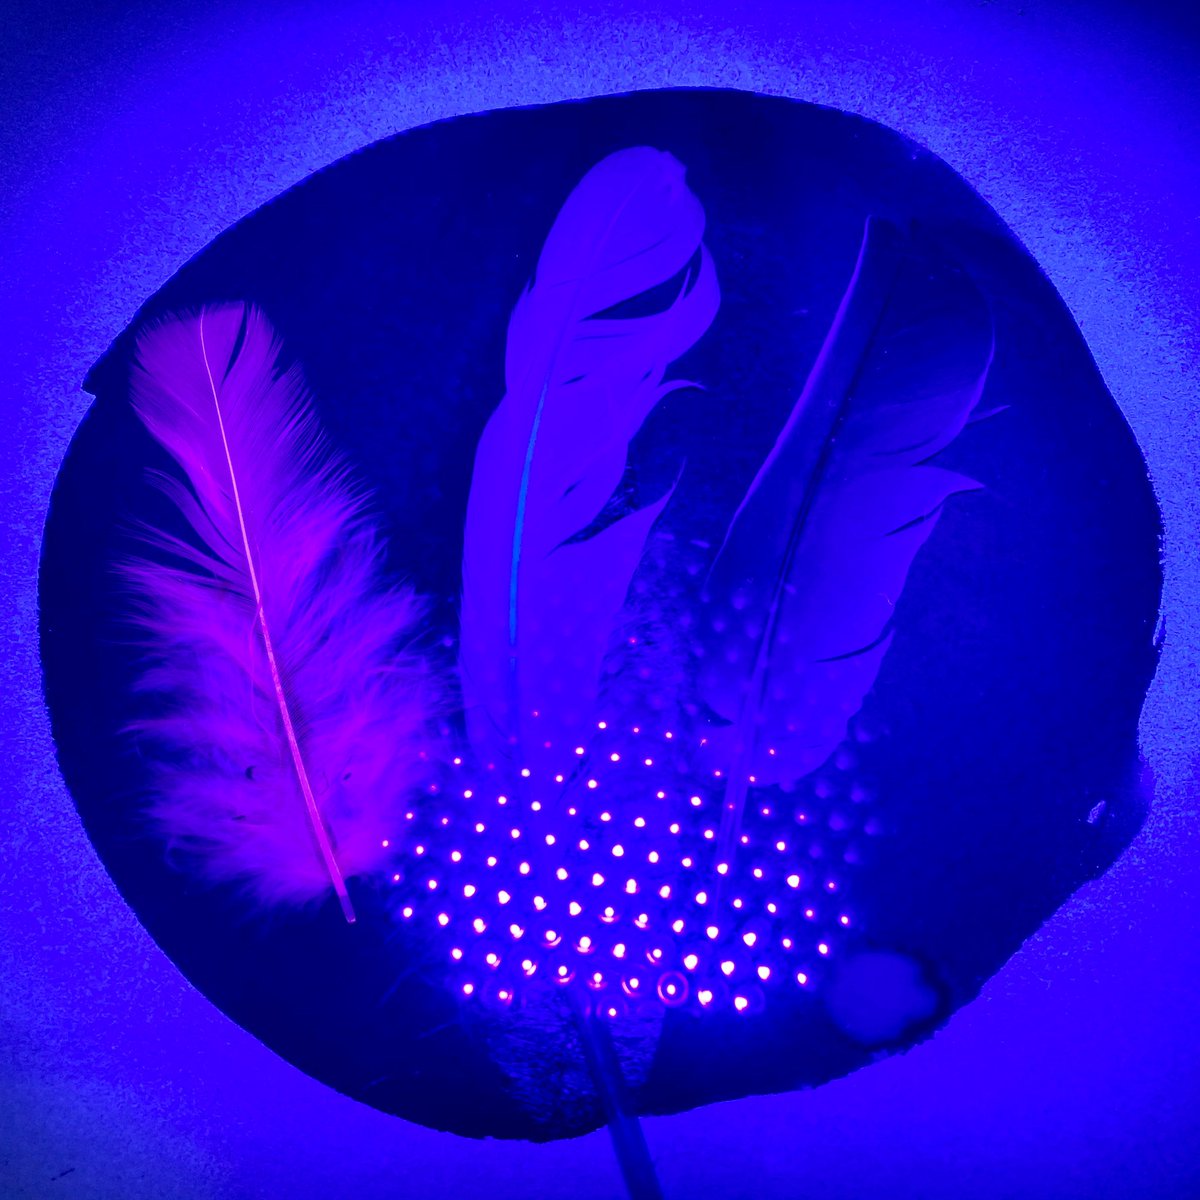 A cyanotype a day for #100daysprojectscotland Experimenting & upskilling. 

#100daysproject2020 #cyanotype #cyanotypes #blueprint #creativeedi #selfisolating #alonewithmyart #homeartistresidency #artistinisolation #freelanceartist #getcreativeathome #lockdownart #edinburghartist